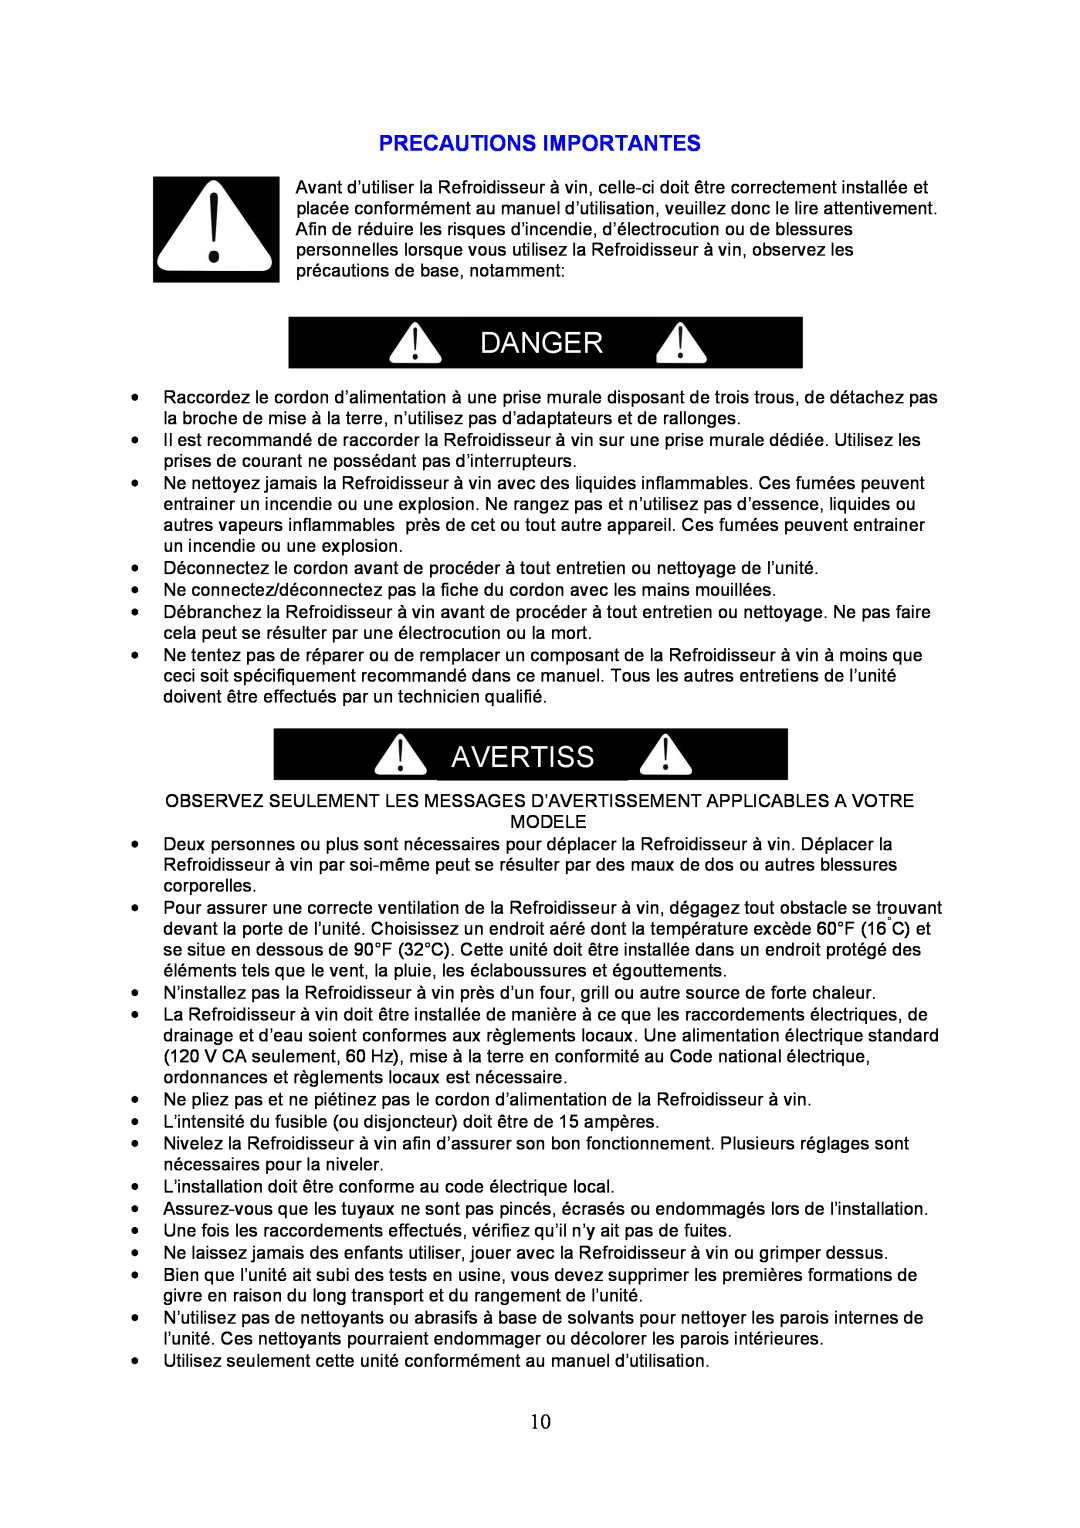 Igloo FRW154C instruction manual Precautions Importantes, Danger, Avertiss 